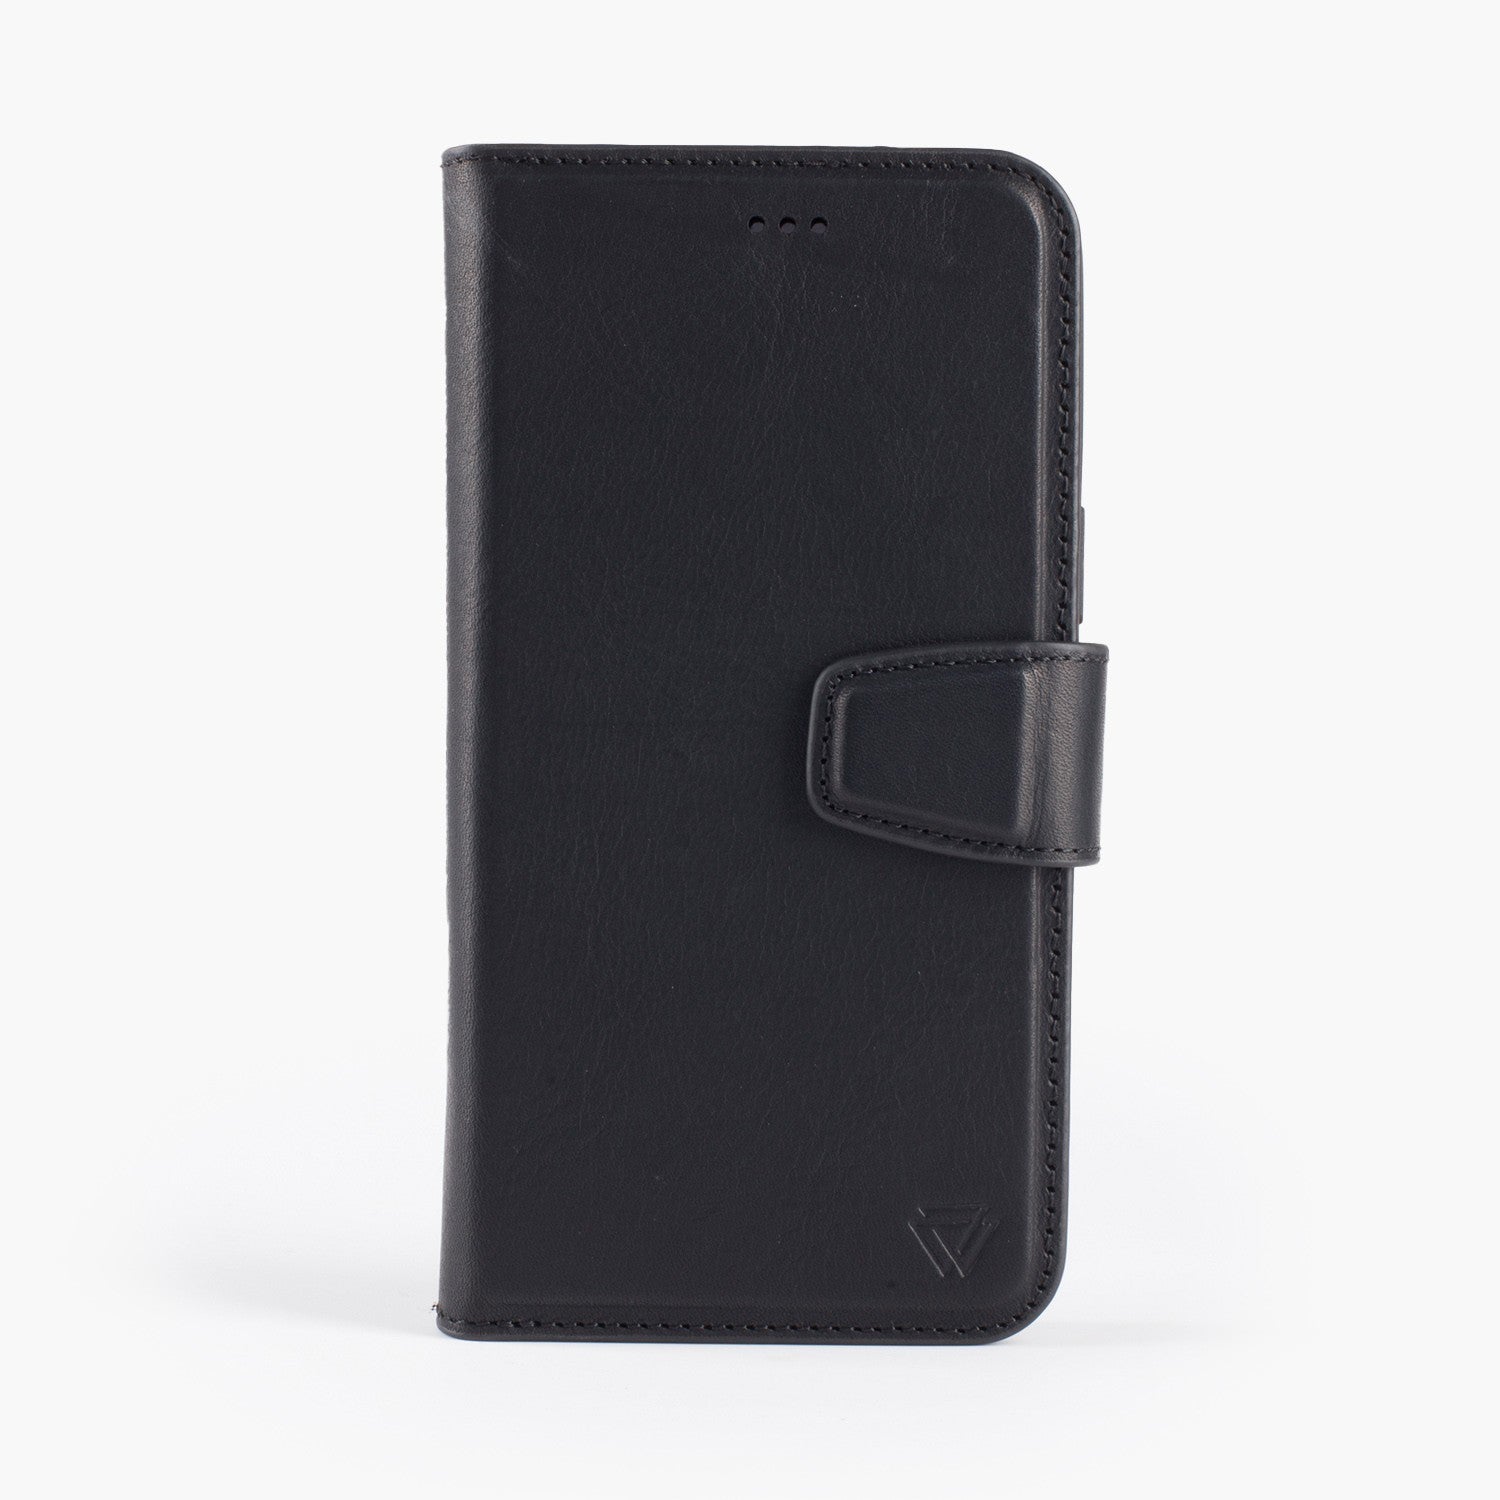 Wachikopa leather Magic Book Case 2 in 1 for iPhone 11 Black